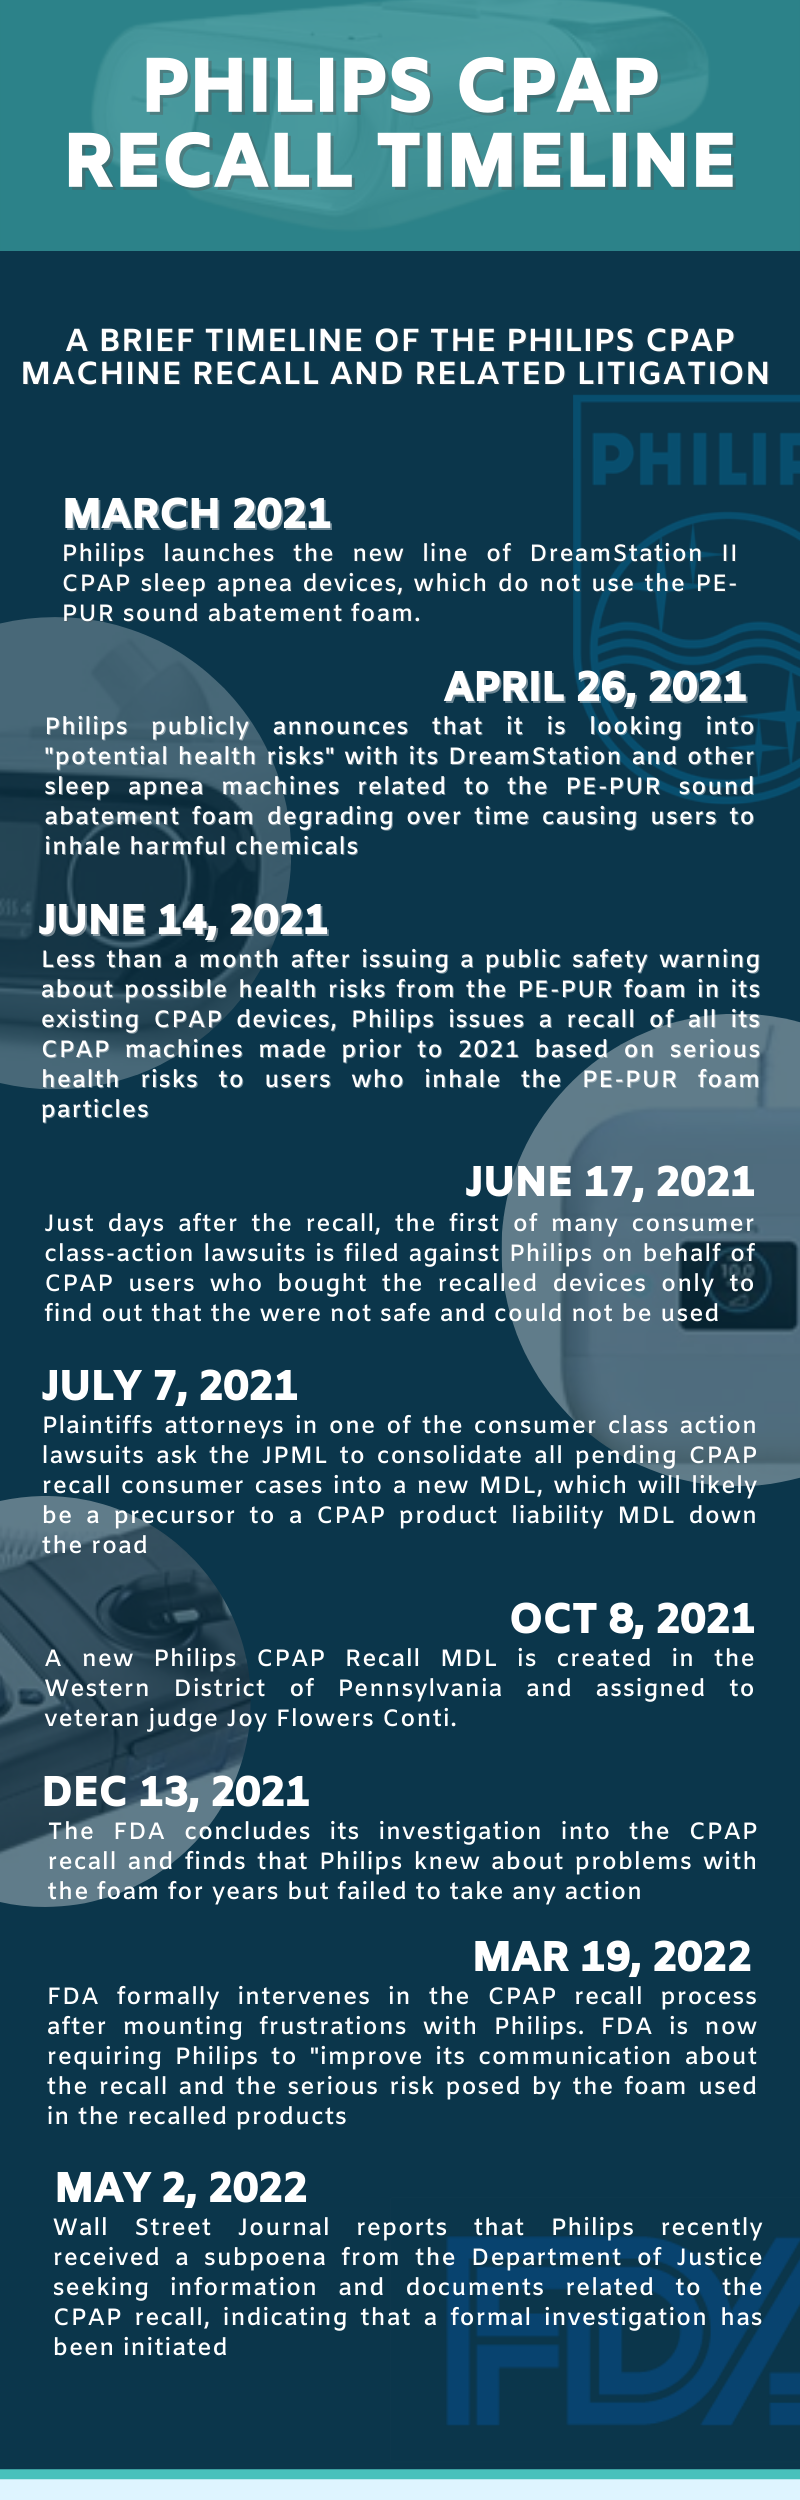 Philips CPAP Machines